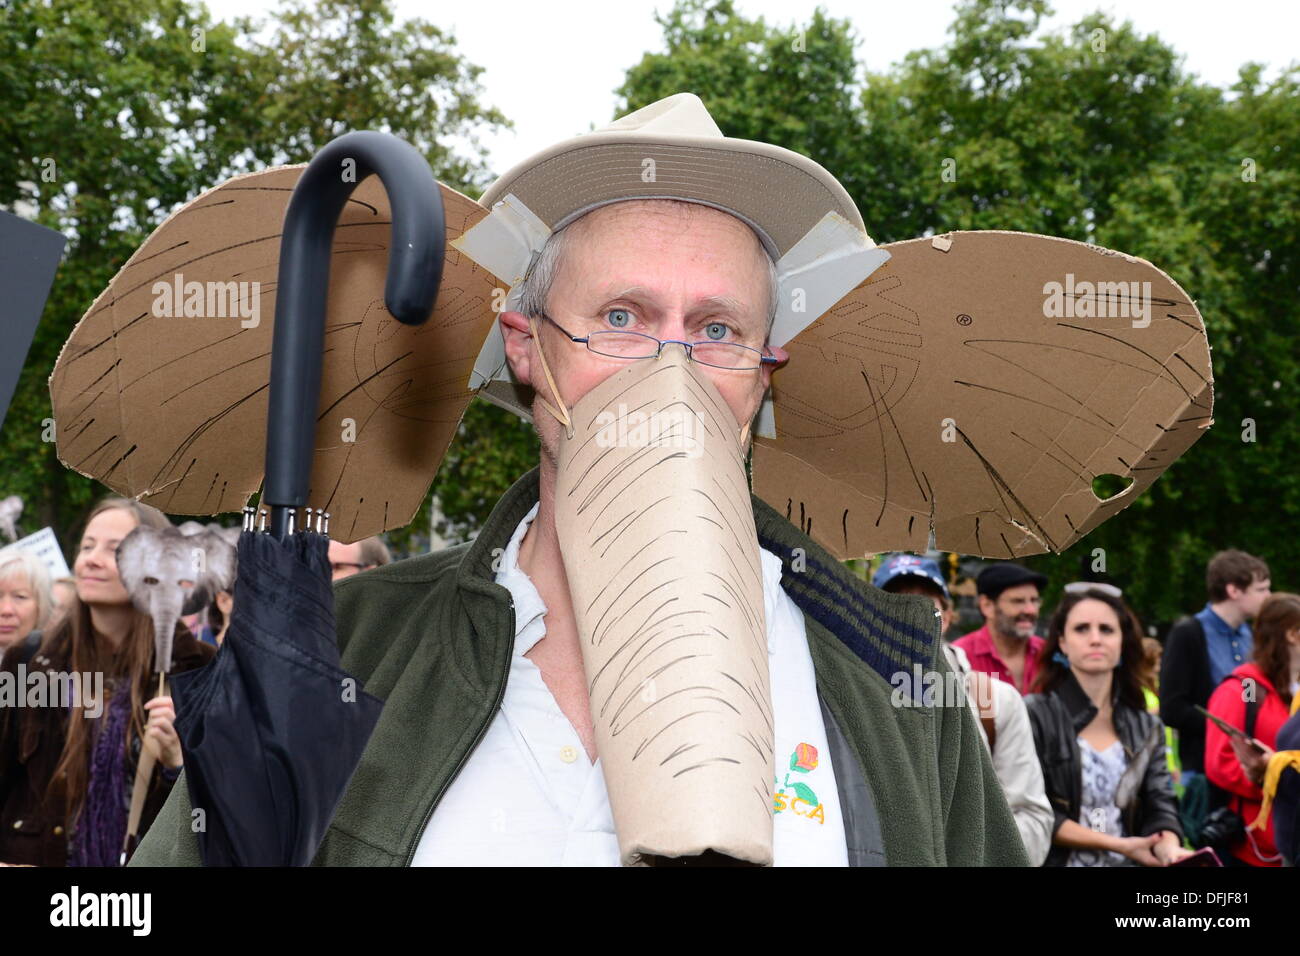 London UK, 4. Oktober 2013: Demonstrant tragen ein Elefant Maske außerhalb Parliament Square in London. Siehe Li / Alamy Live News Stockfoto